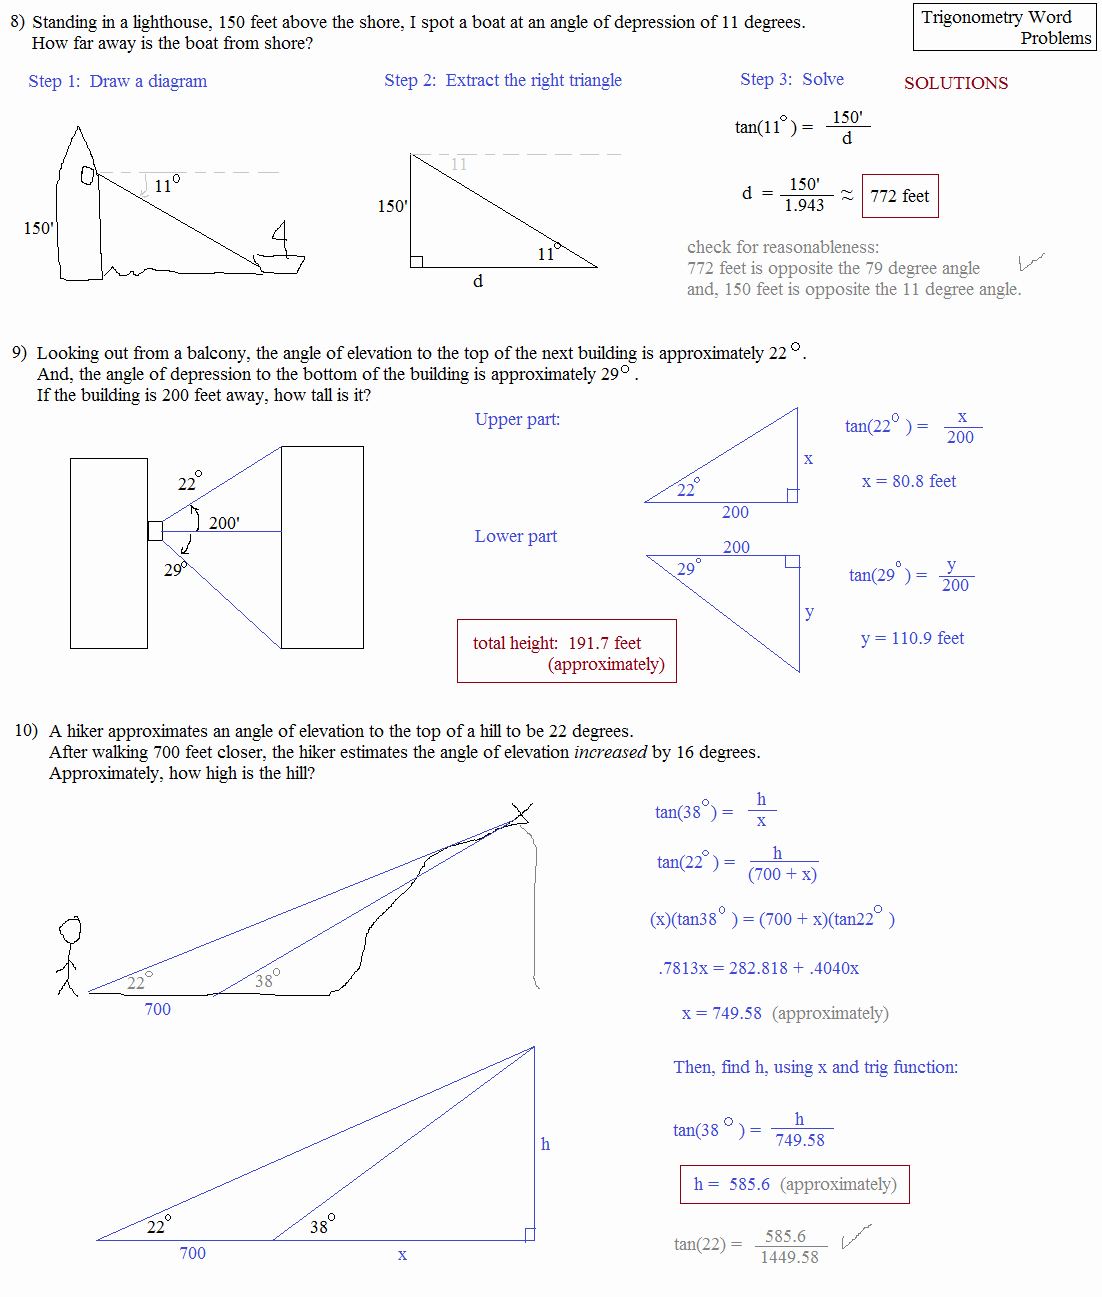 Trigonometry Word Problems Worksheet Answers Elegant Math Plane Trigonometry Word Problems